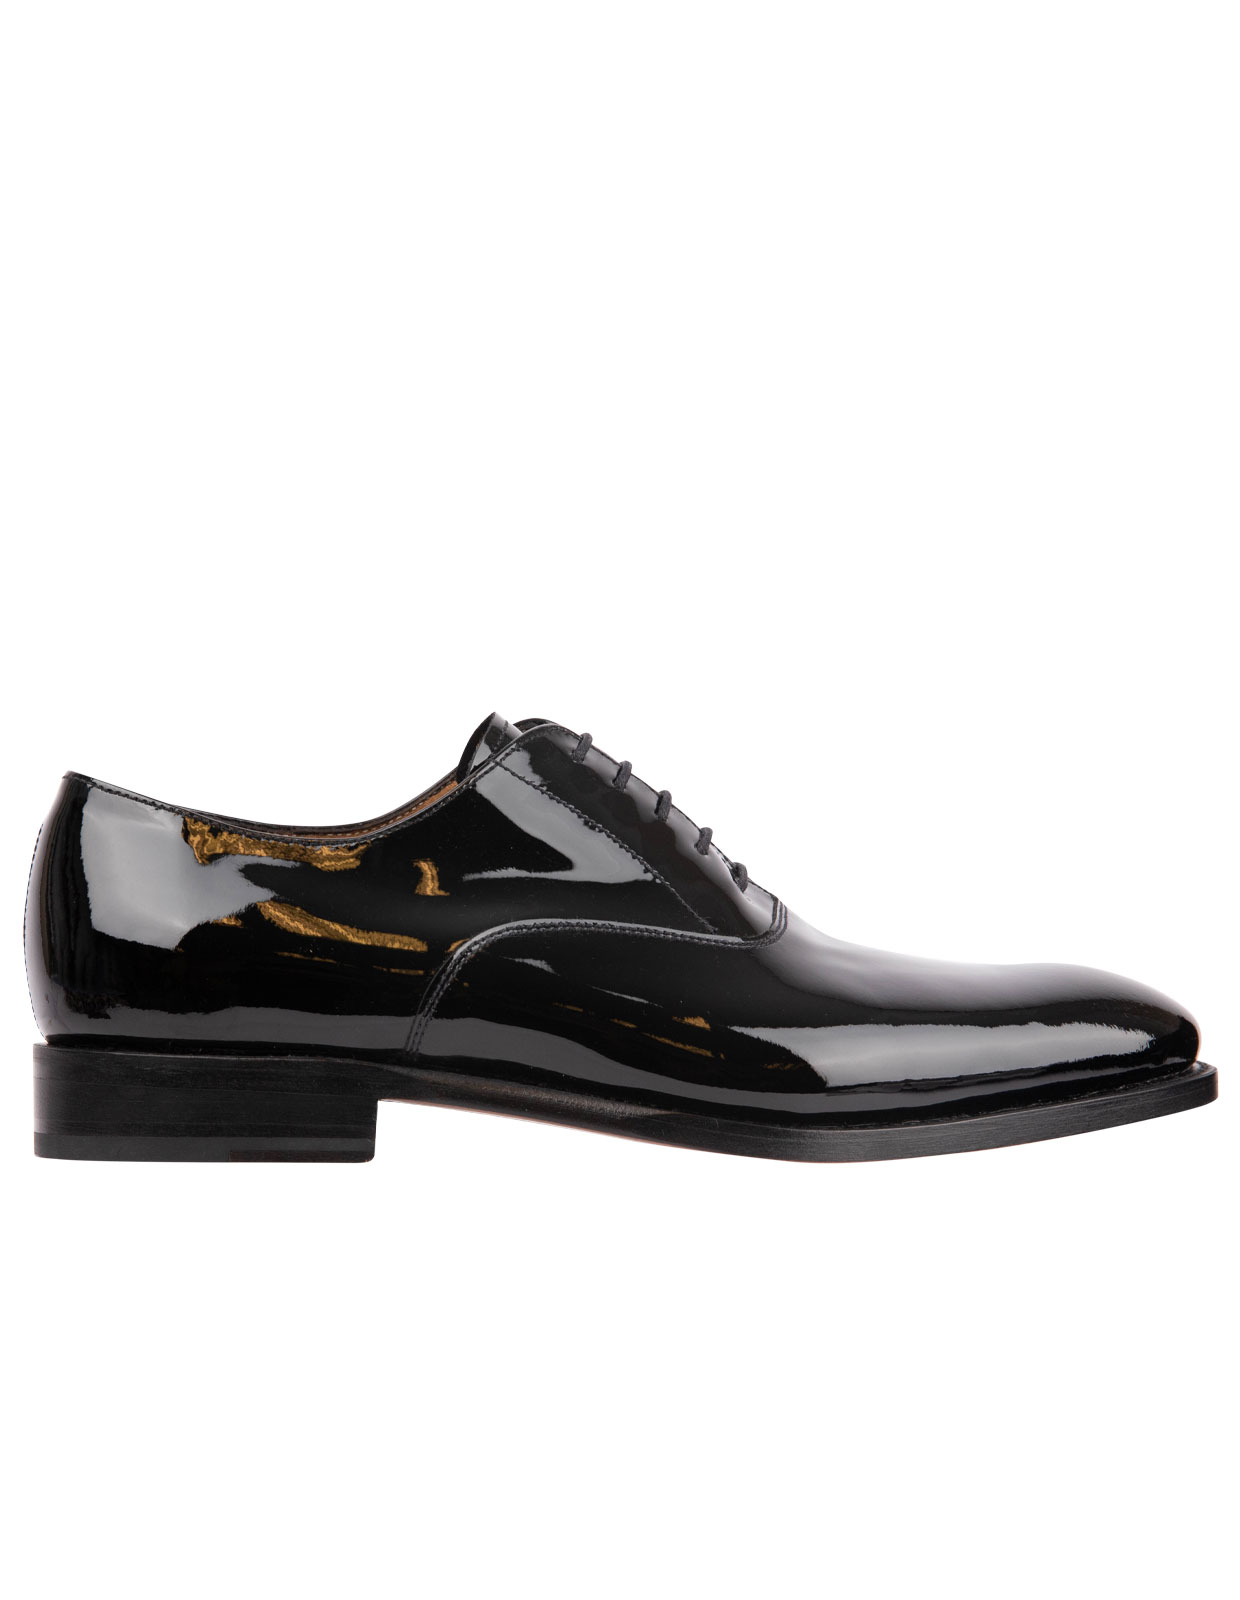 Patent Leather Oxford Shoe Black Stl 10.5